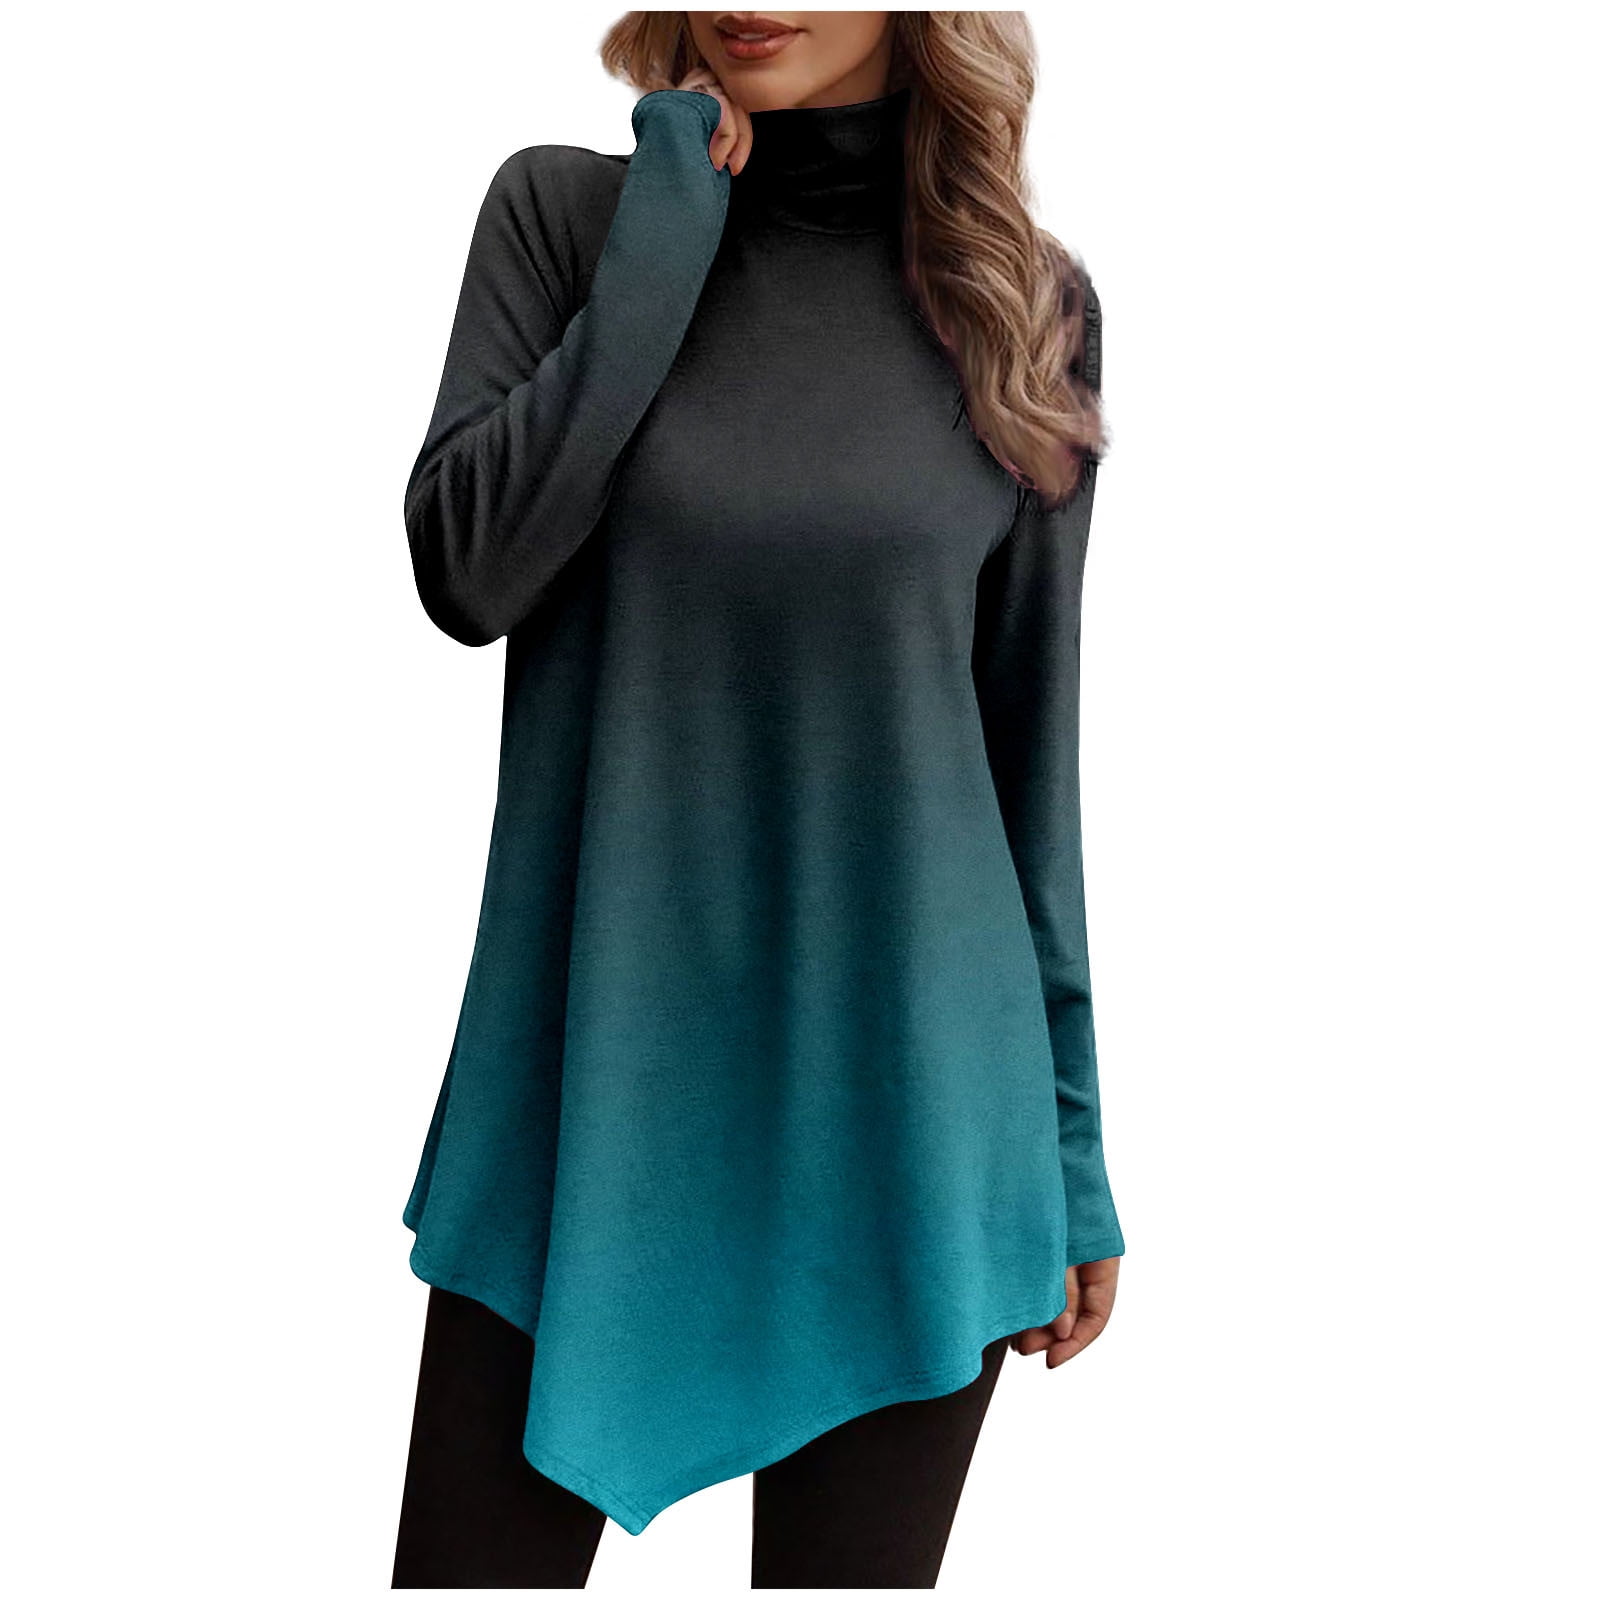 FAIWAD Women's Long Sleeve Turtleneck Tunic Tops Trendy Spring Print ...